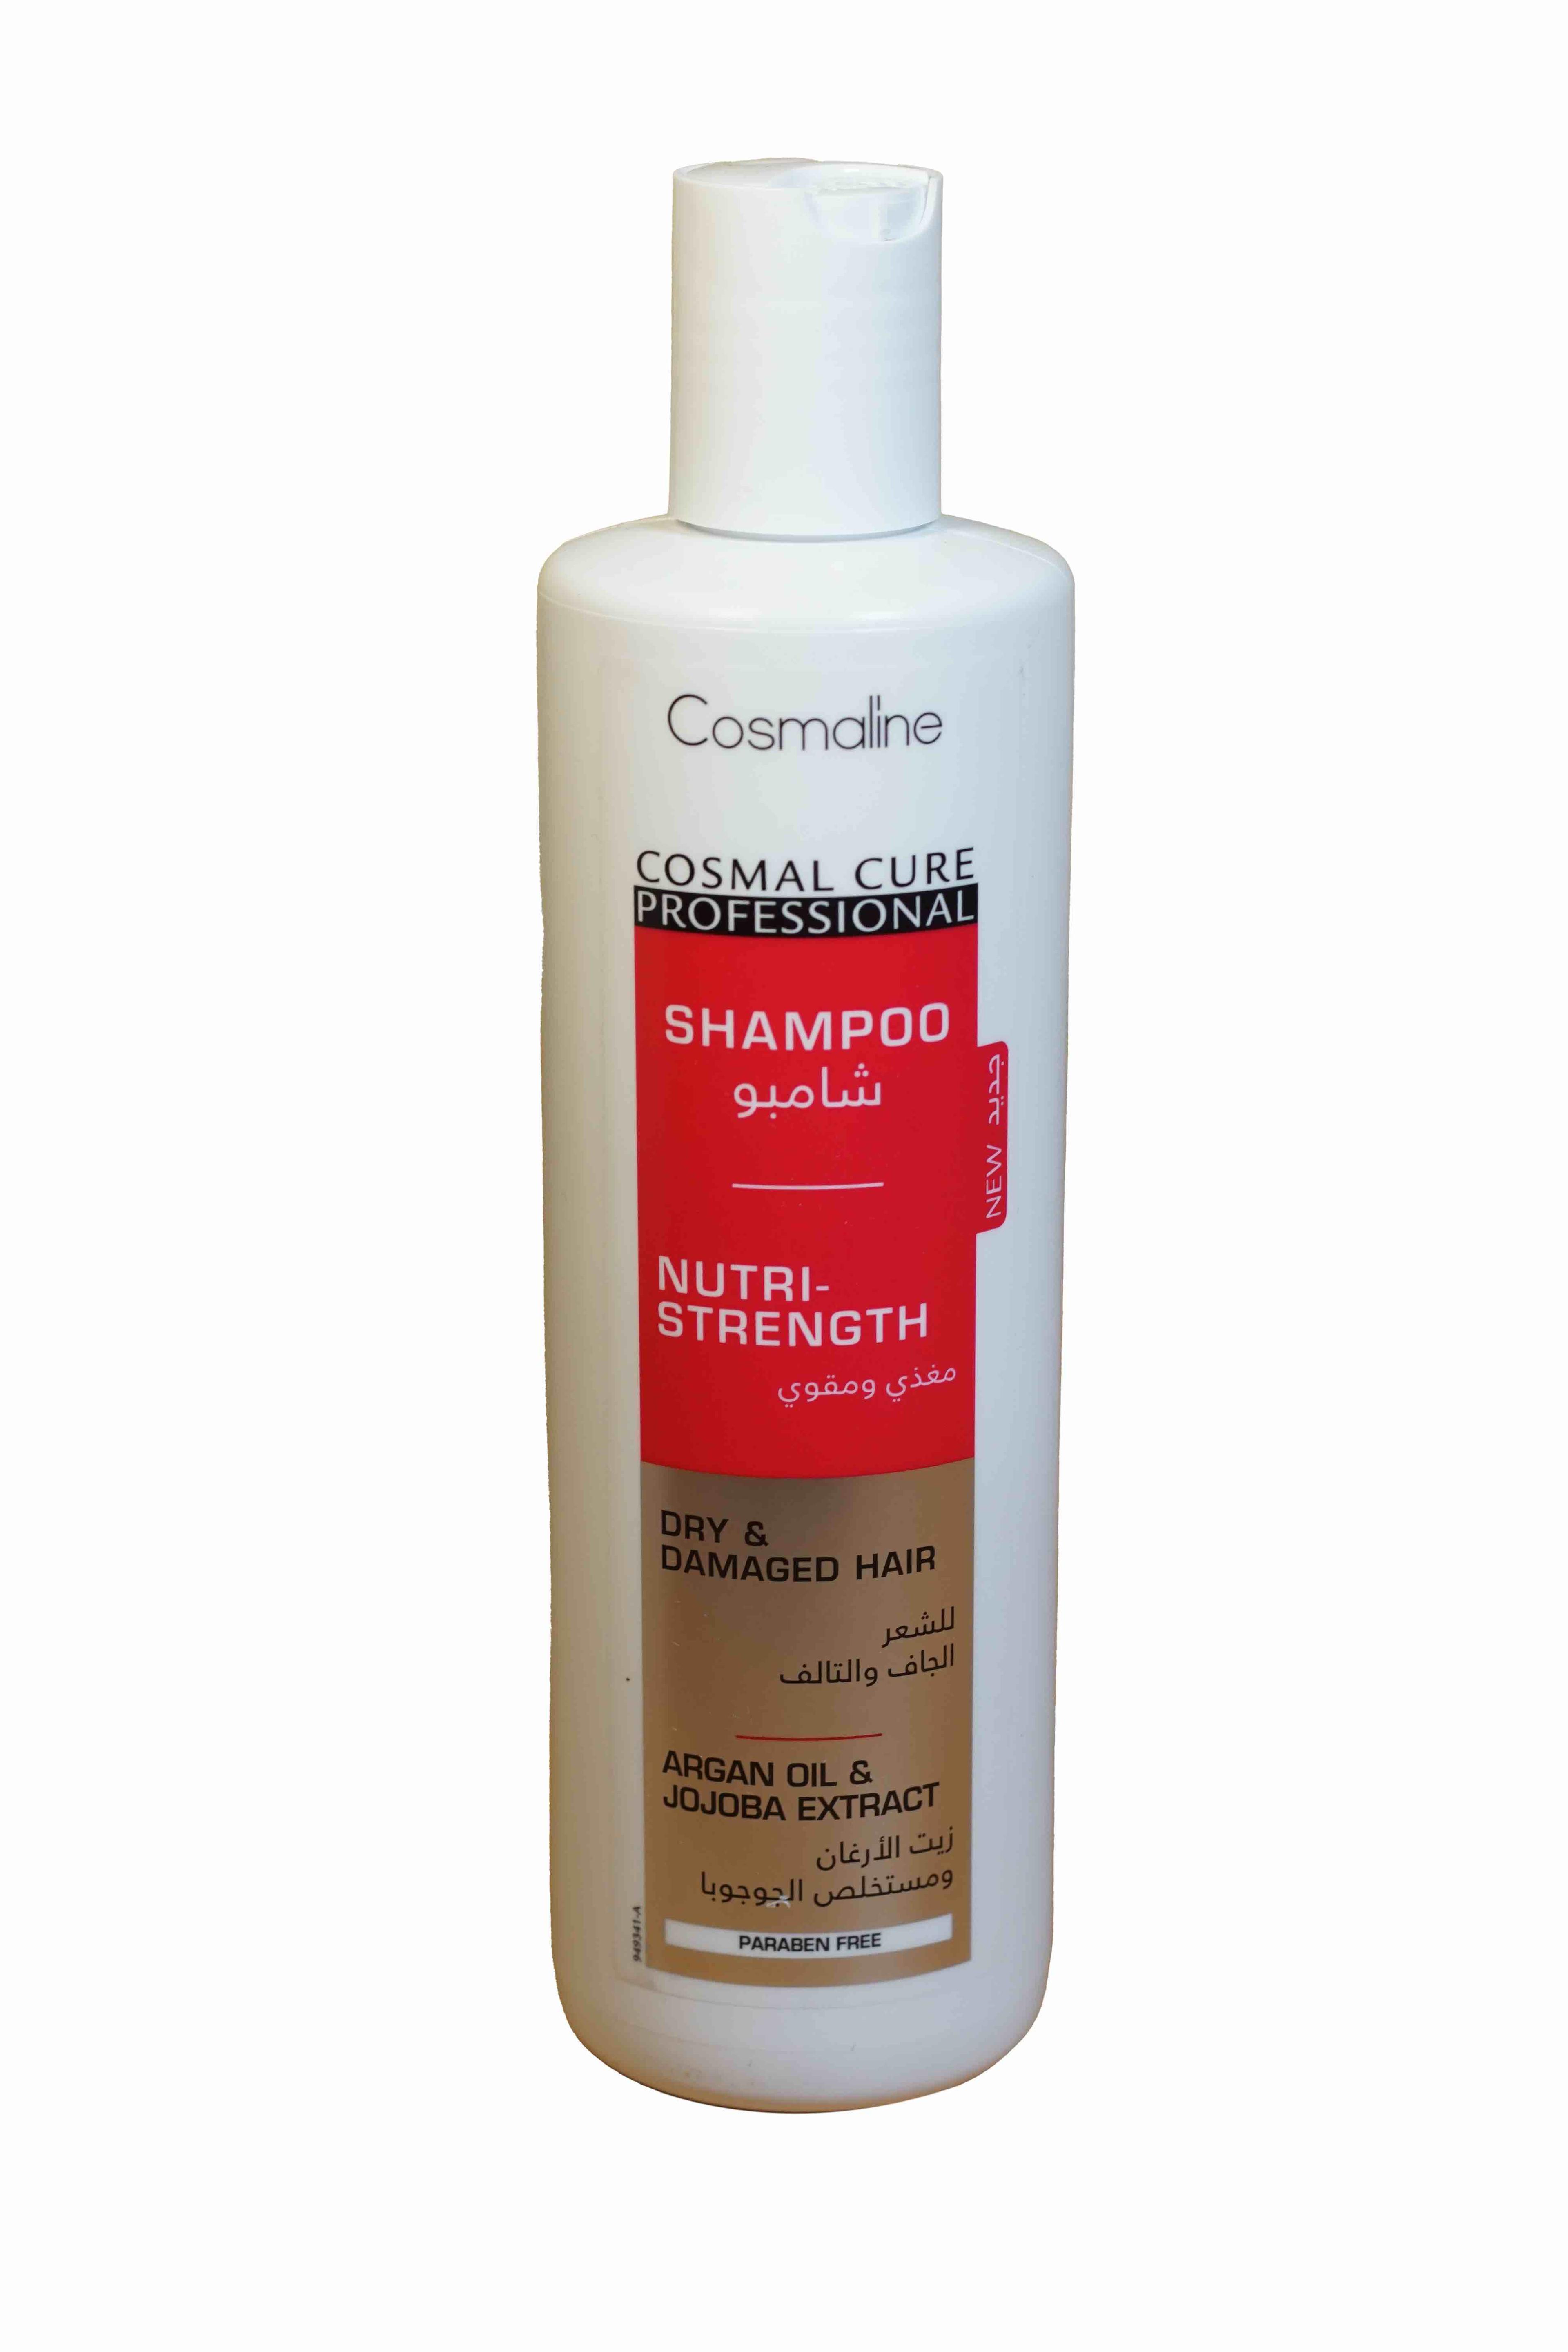 Cosmaline Cure professional Shampoo Nutri-Strength